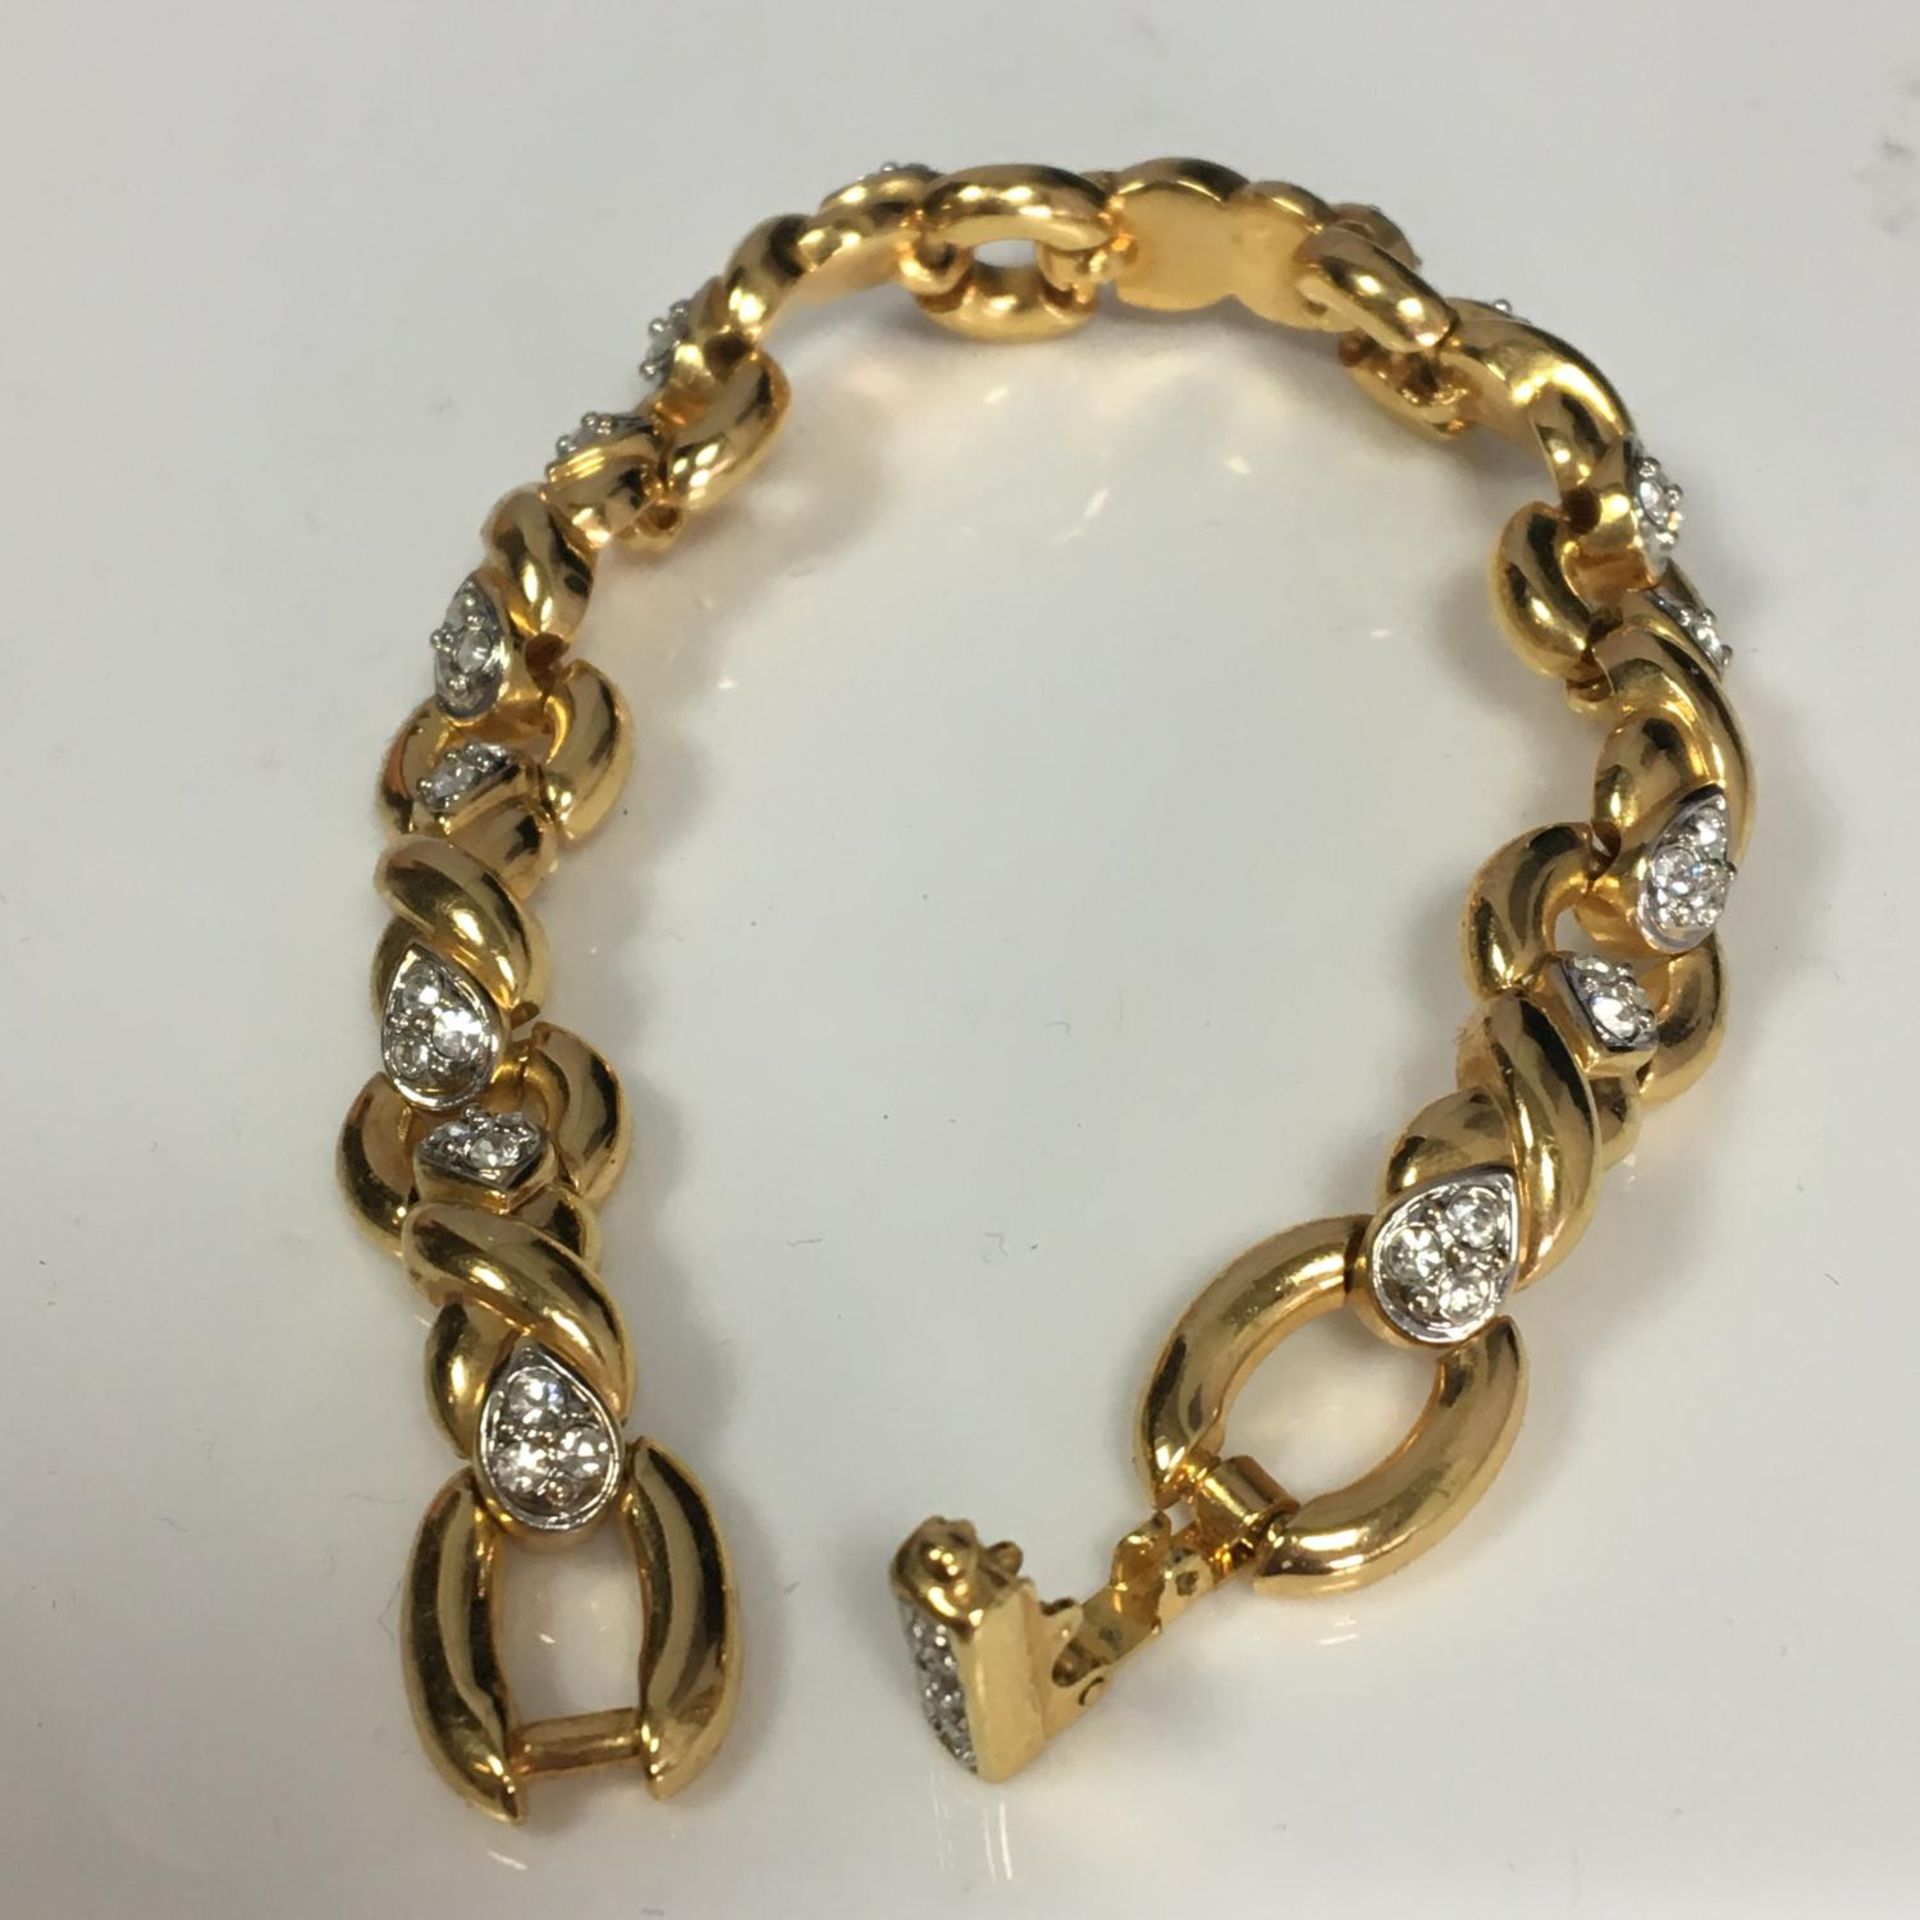 Vintage Swarovski crystal yellow metal bracelet having the Swarovski swan mark. Includes free UK